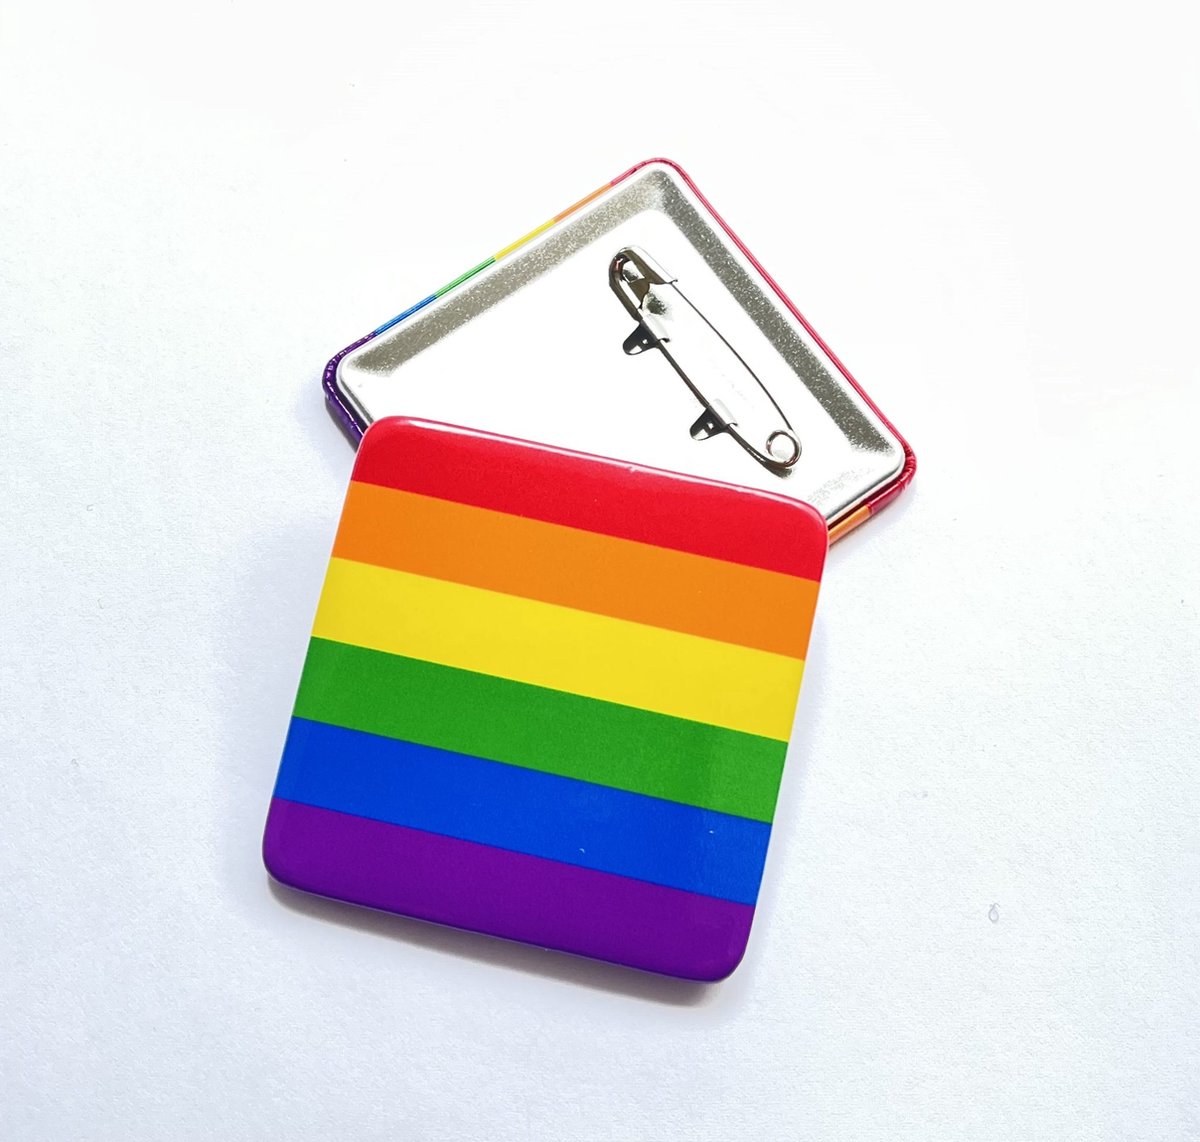 GoedeDoelen.Shop | Button Rainbow Square | Button | LGBTQ Button | Statement | Love Is Love | Rainbow | Pride